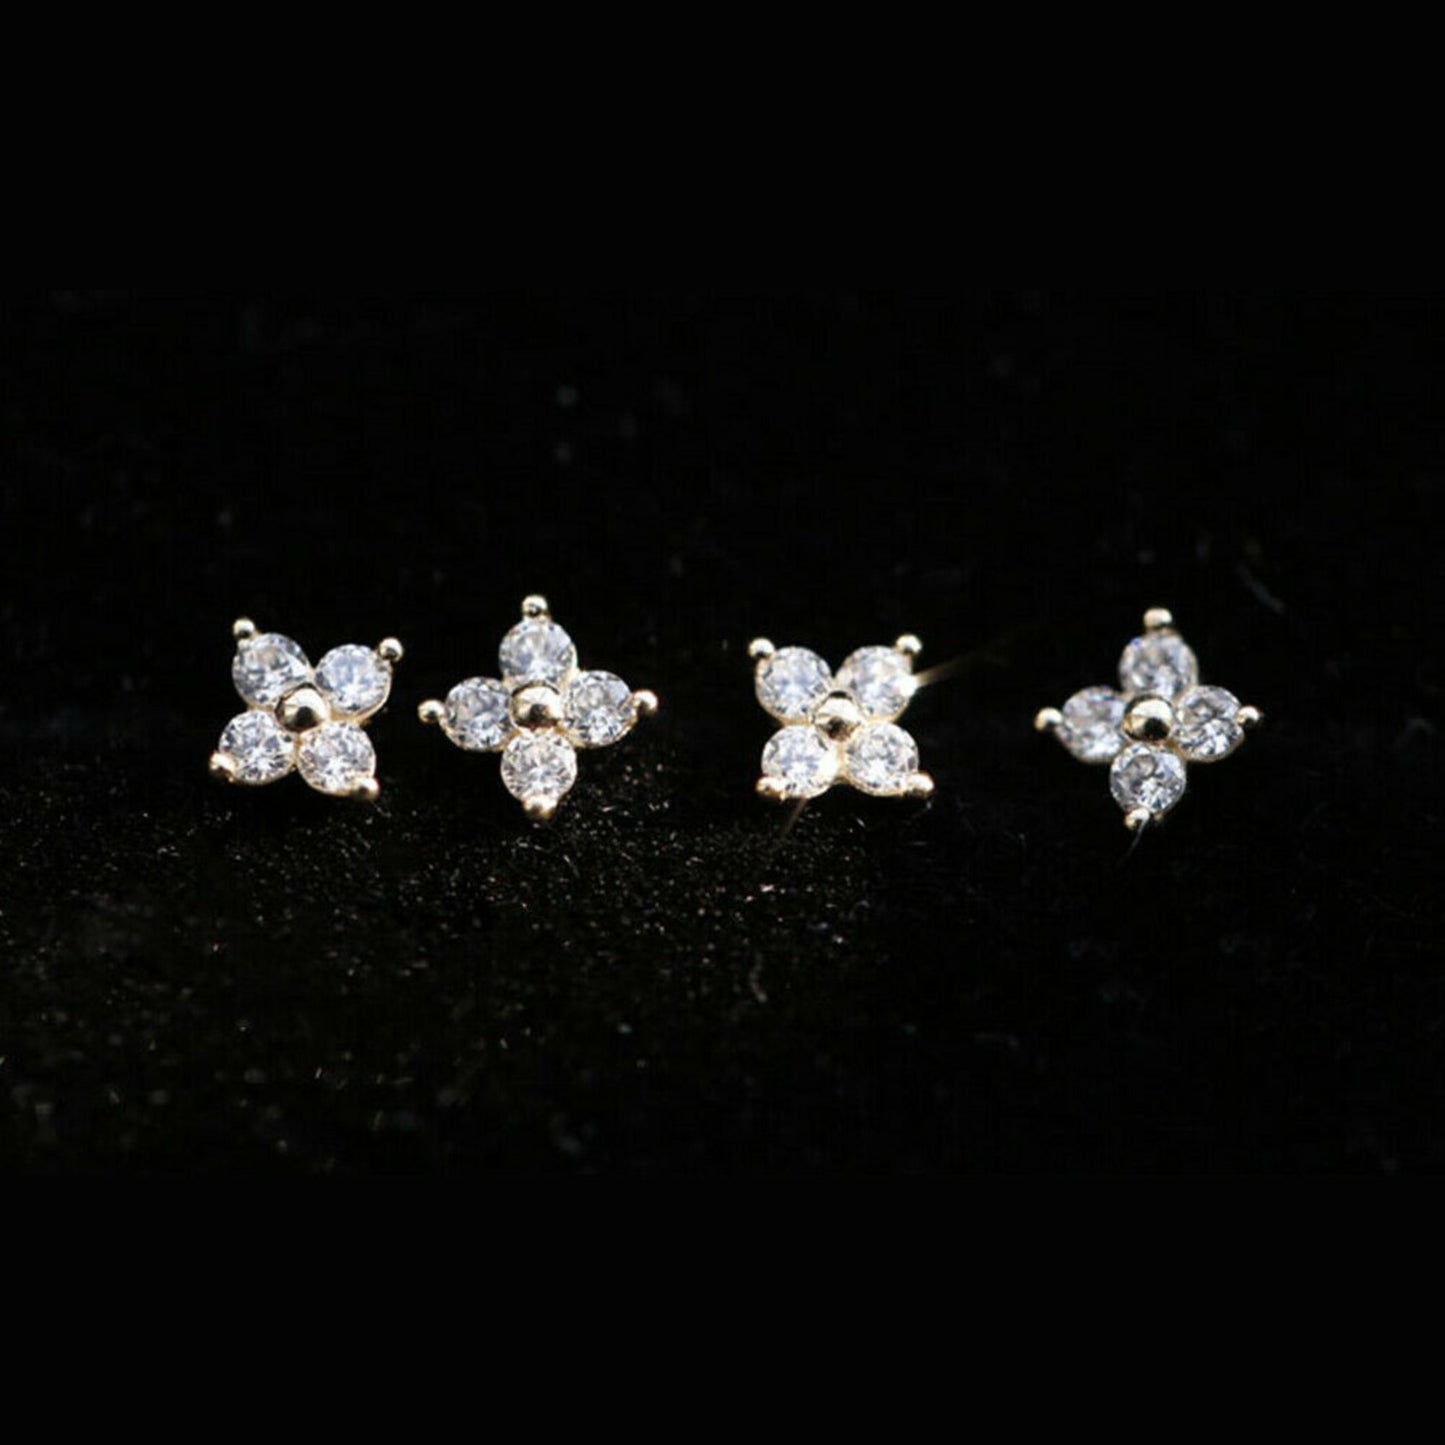 Shiny CZ Flower Stud Earrings in 18K Gold Plated Sterling Silver